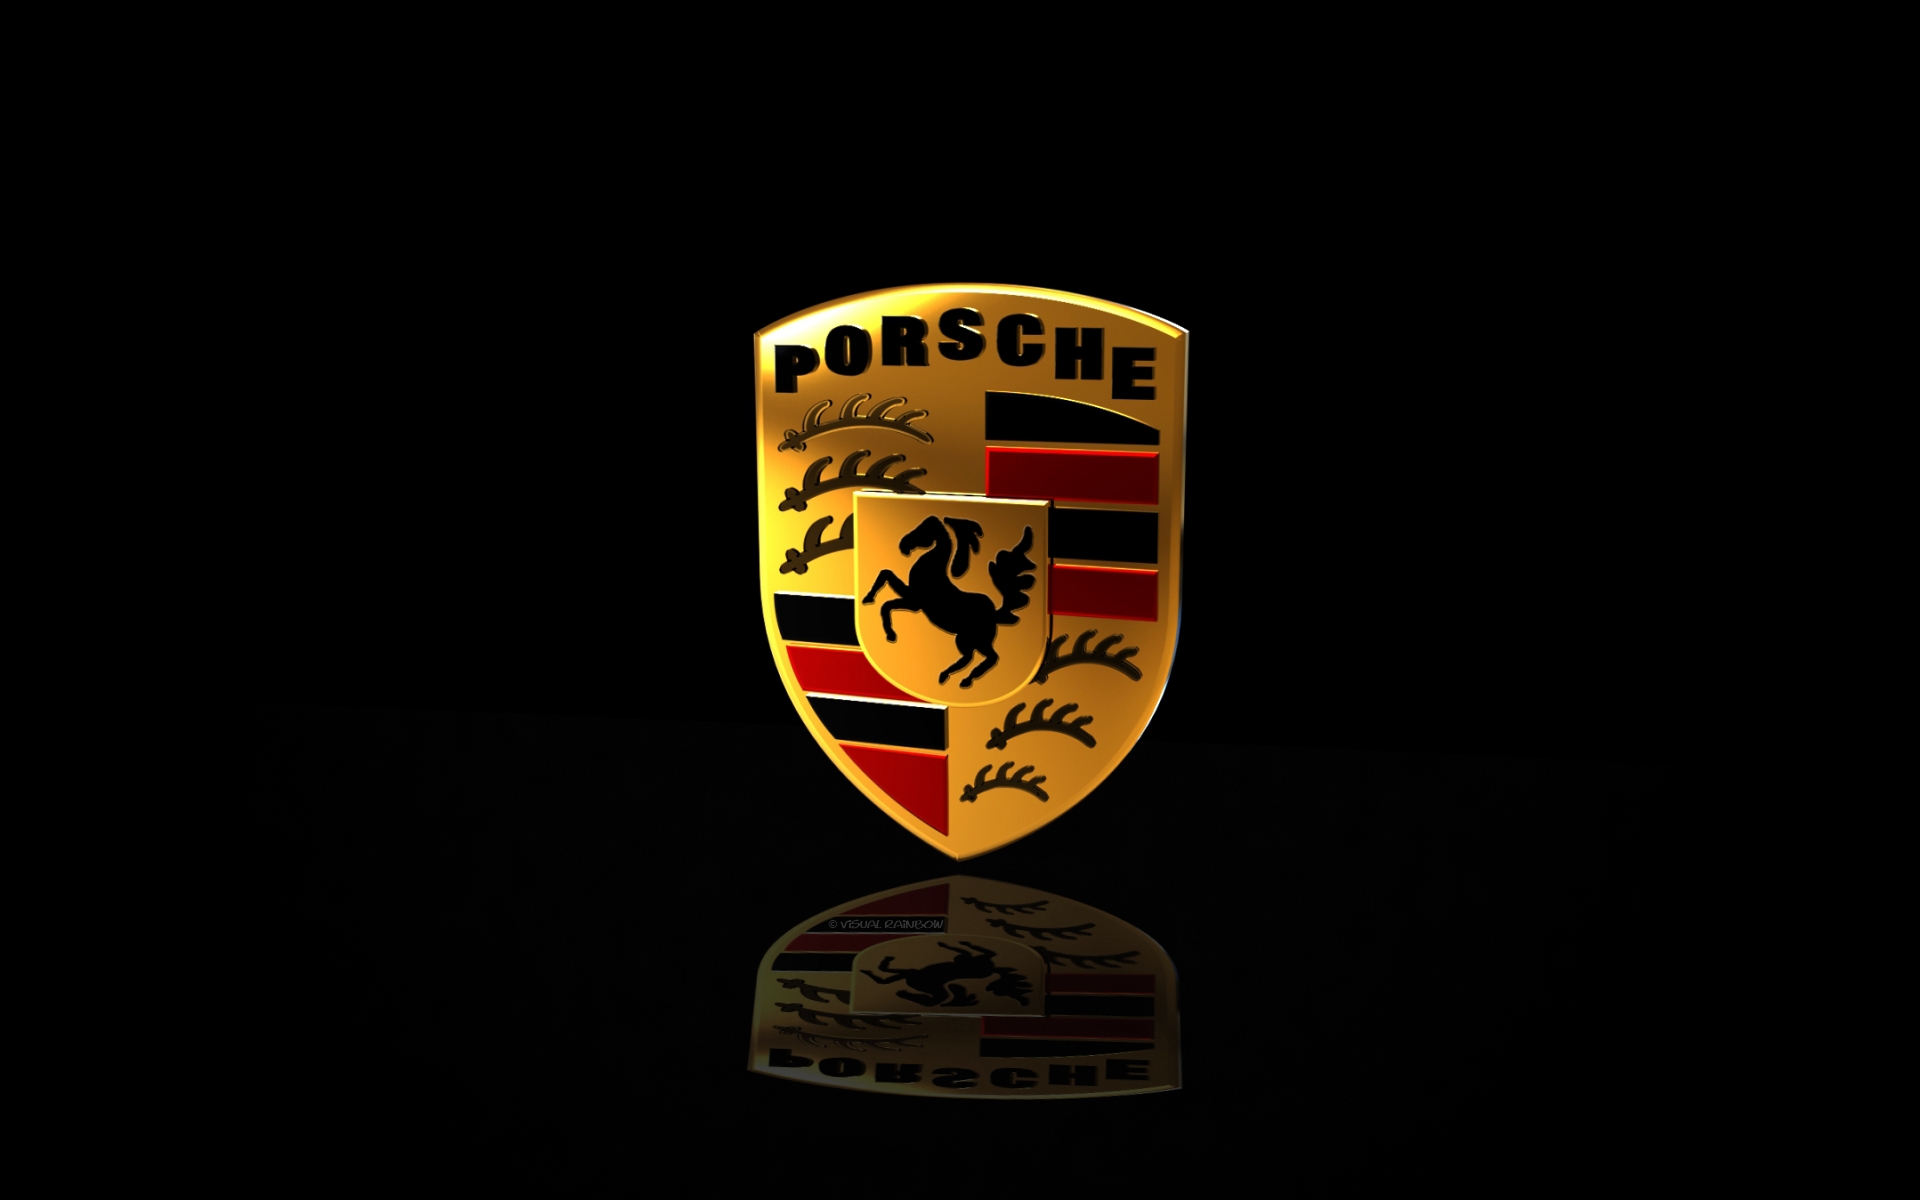 Porsche Logo Wallpaper Pictures Image